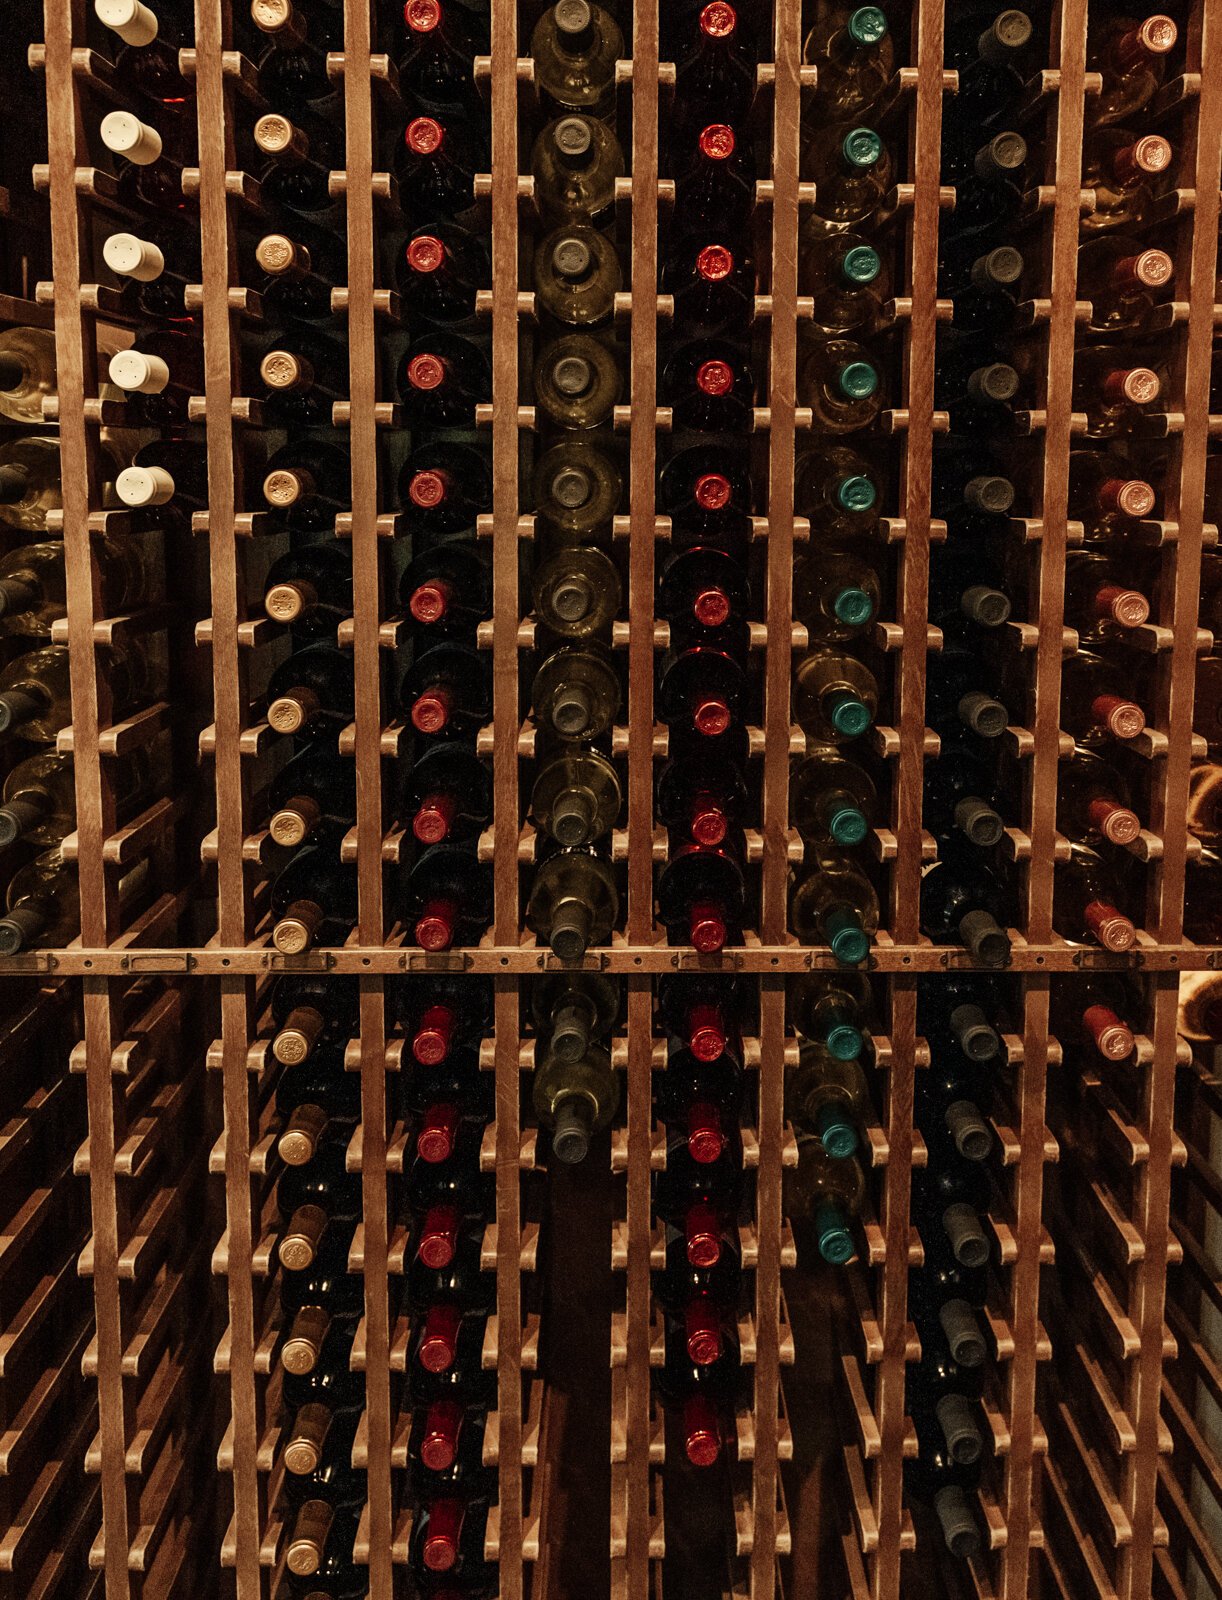 A selection of wines at Hartland Winery.